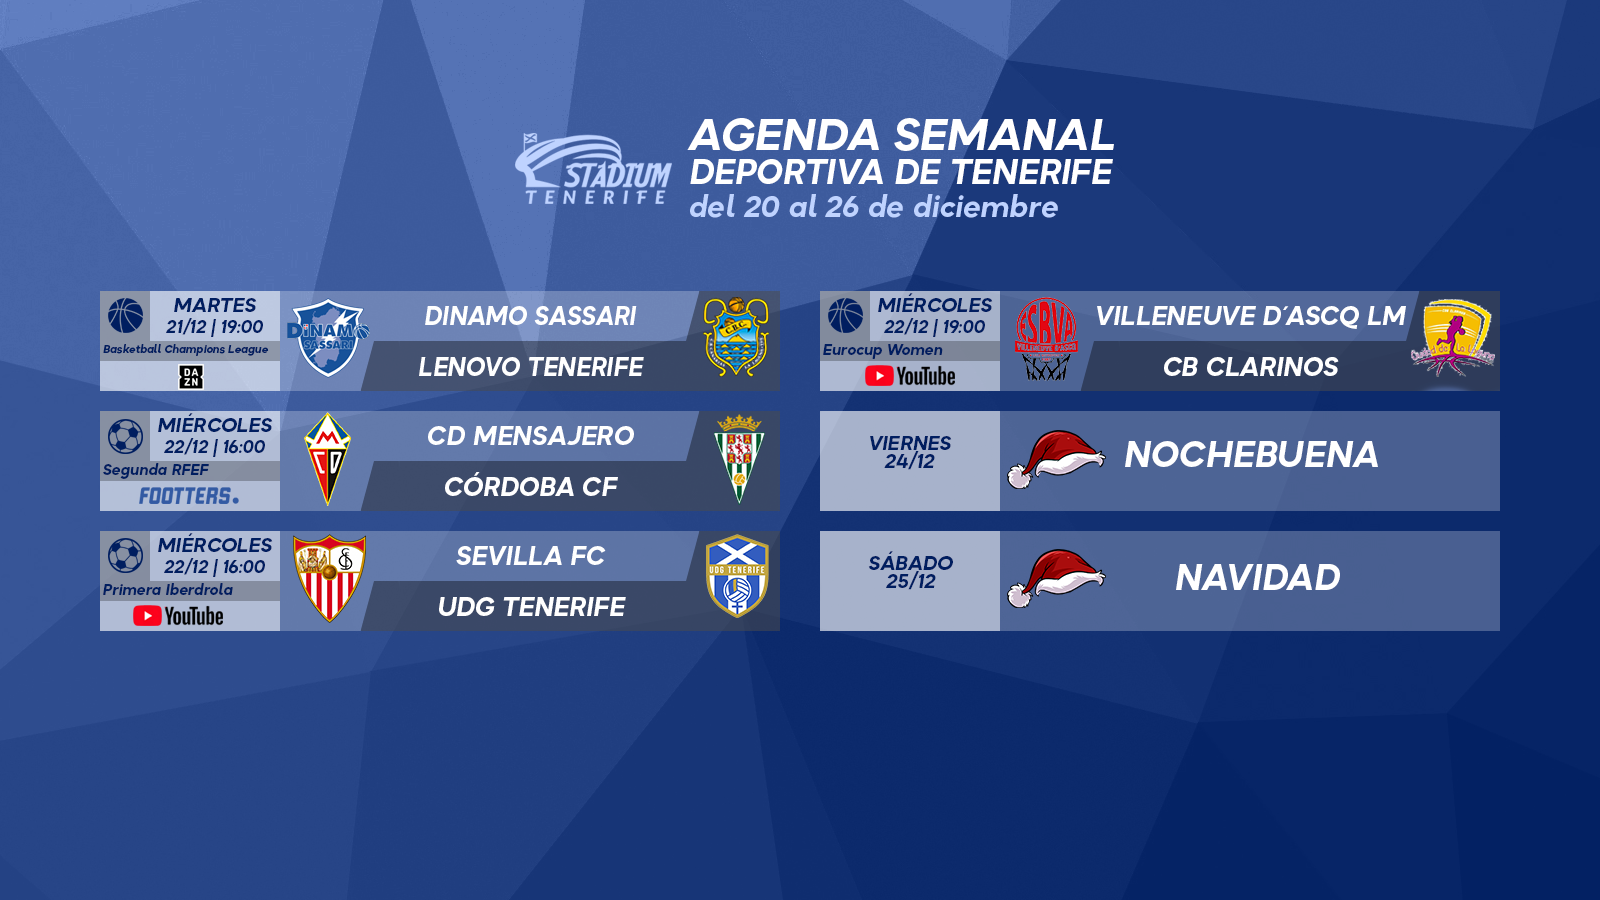 Agenda Semanal Deportiva de Tenerife (20 al 26 de diciembre)